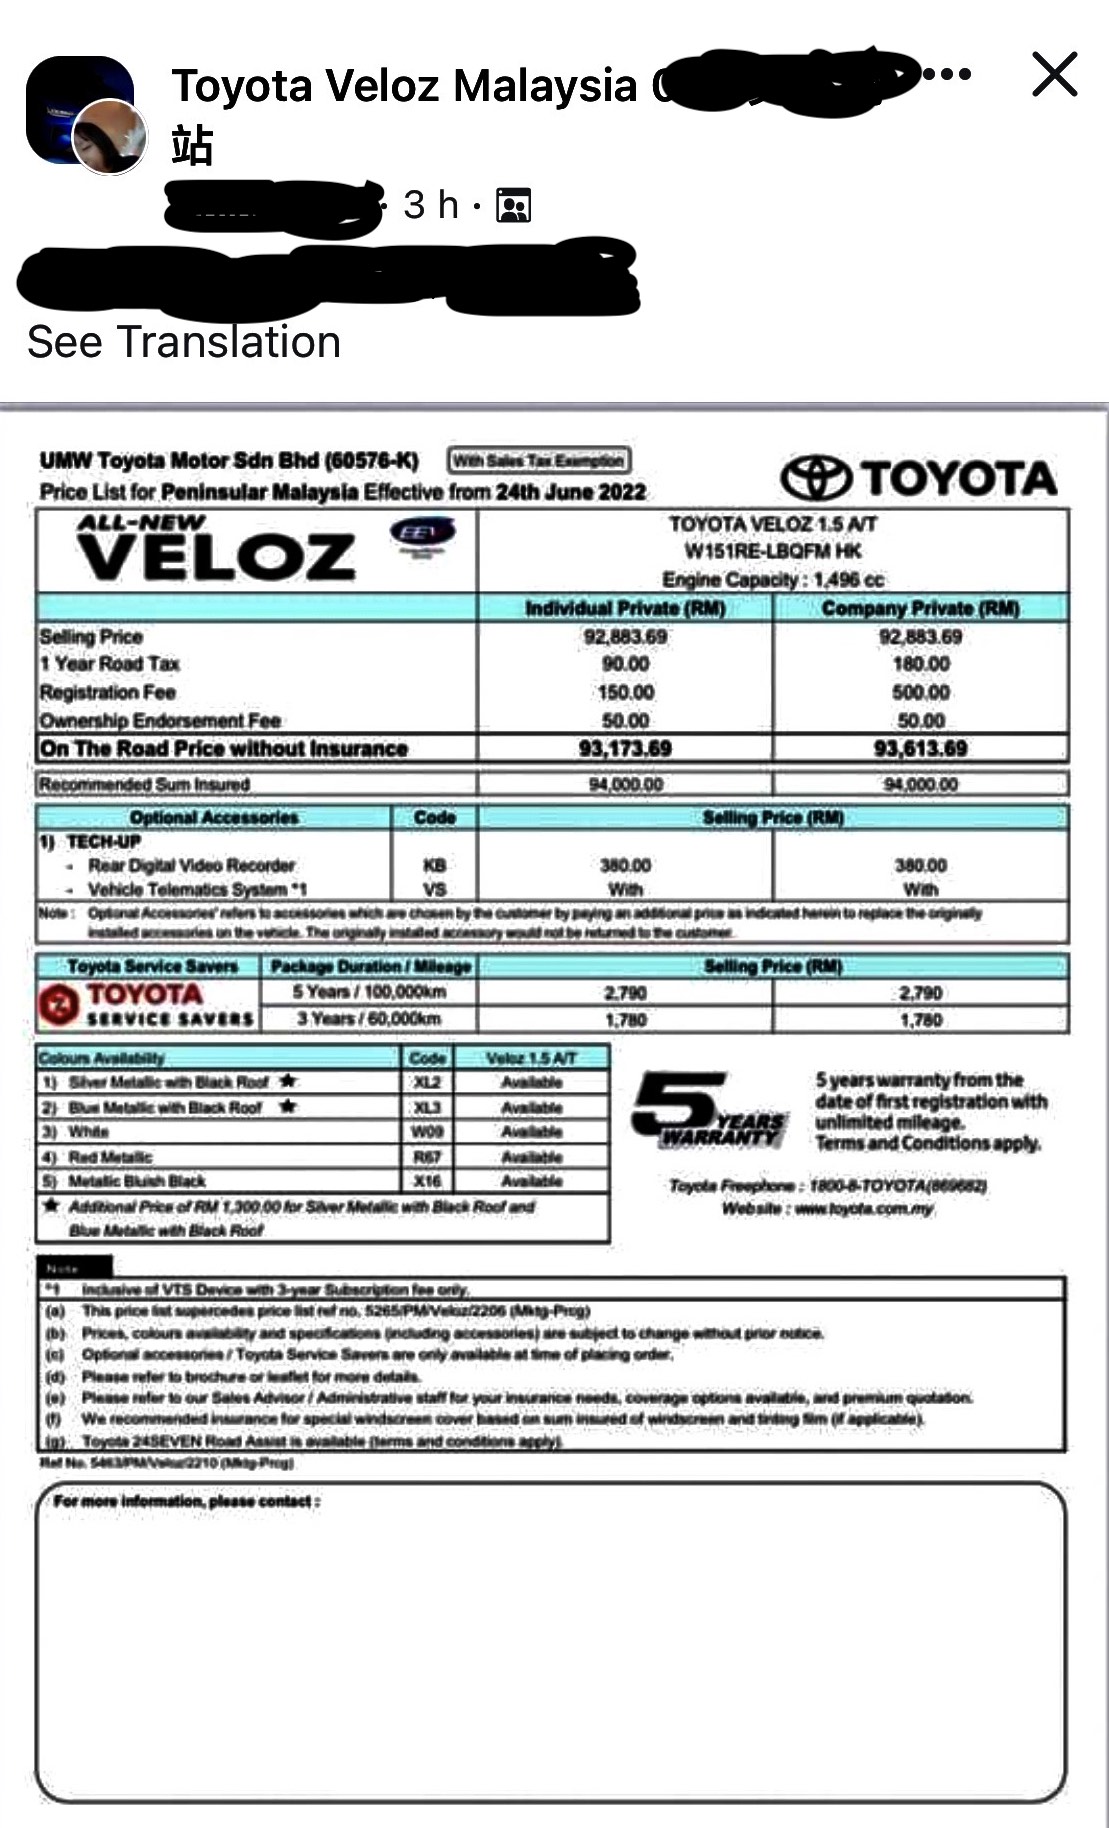 Toyota Veloz Compact MPV Brochure Leaked On Social Media